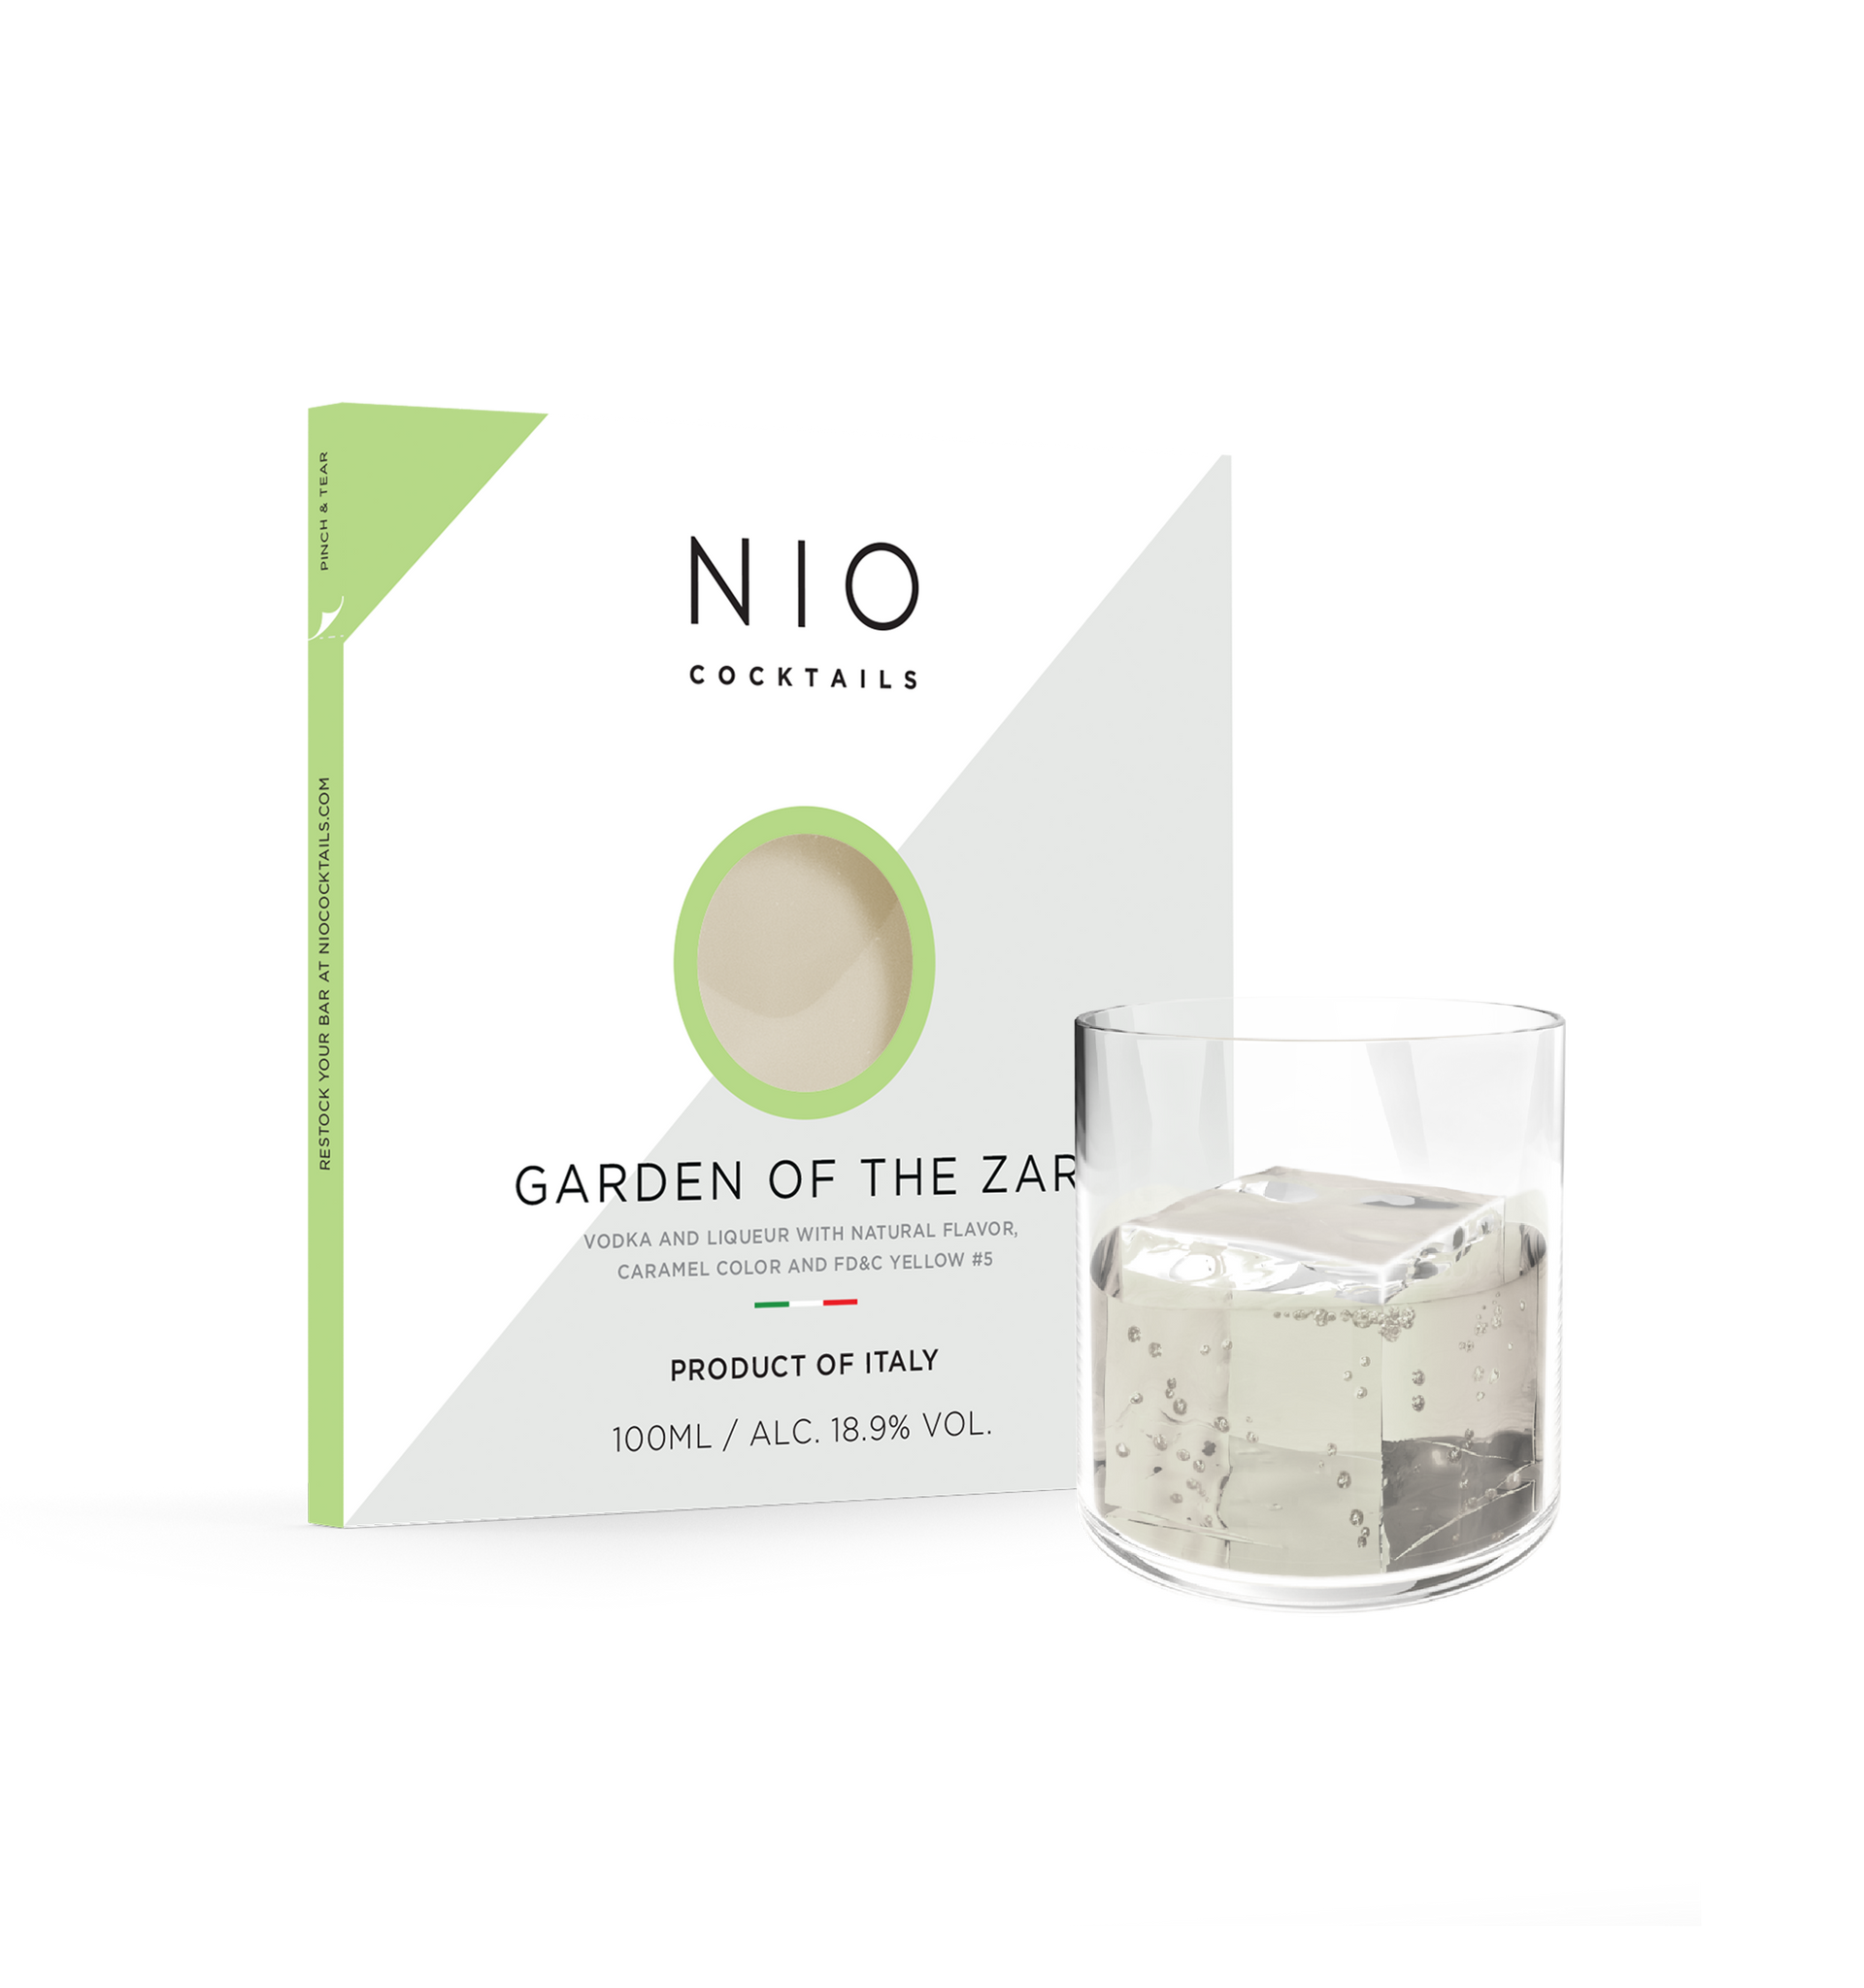 NIO COCKTAILS Garden of Zar glass